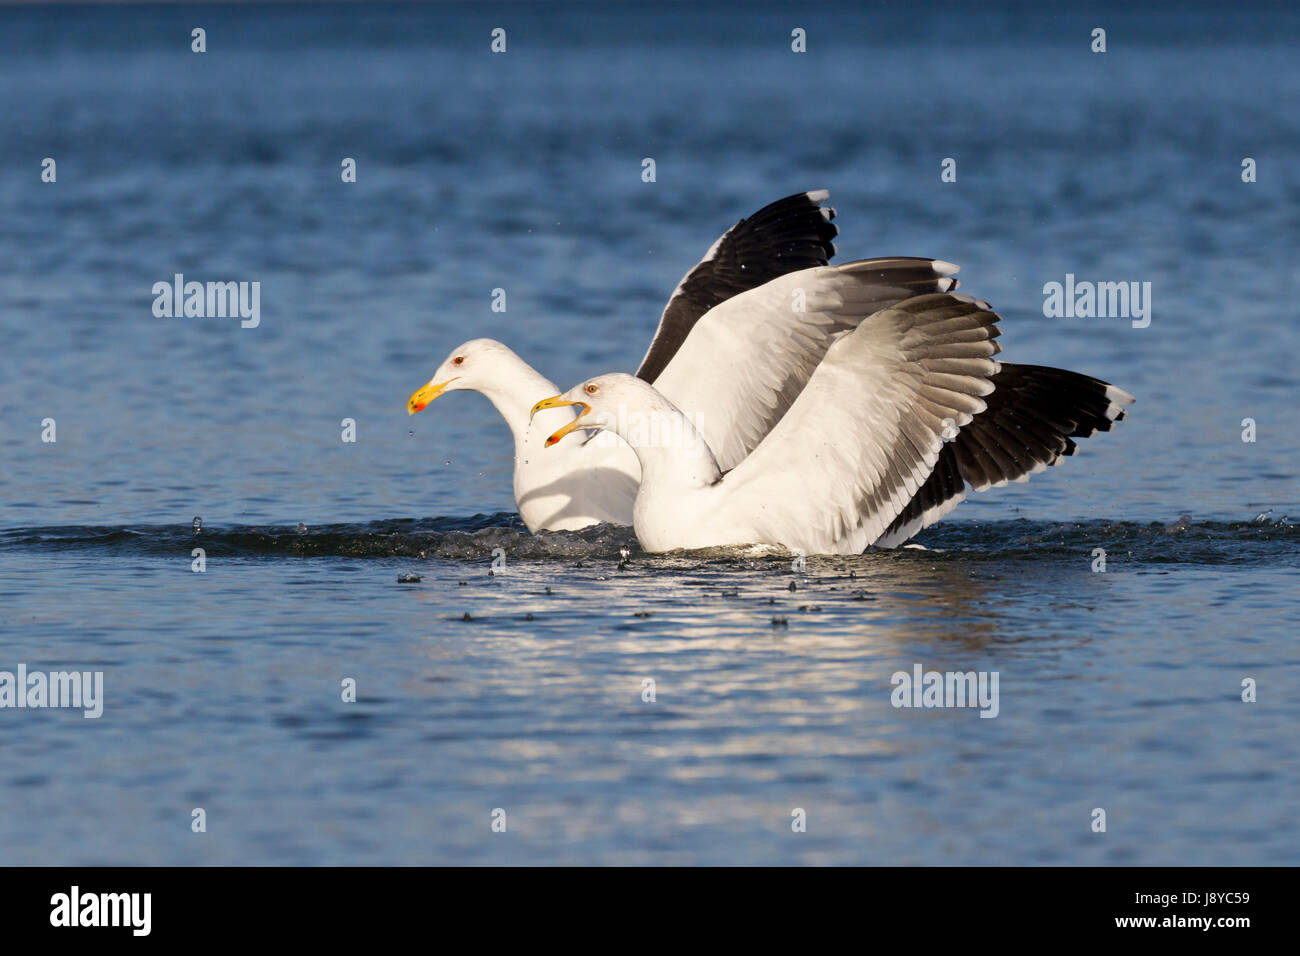 animal, horizontal, two, nature, seagulls, gulls, blue, animal, beach, seaside, Stock Photo